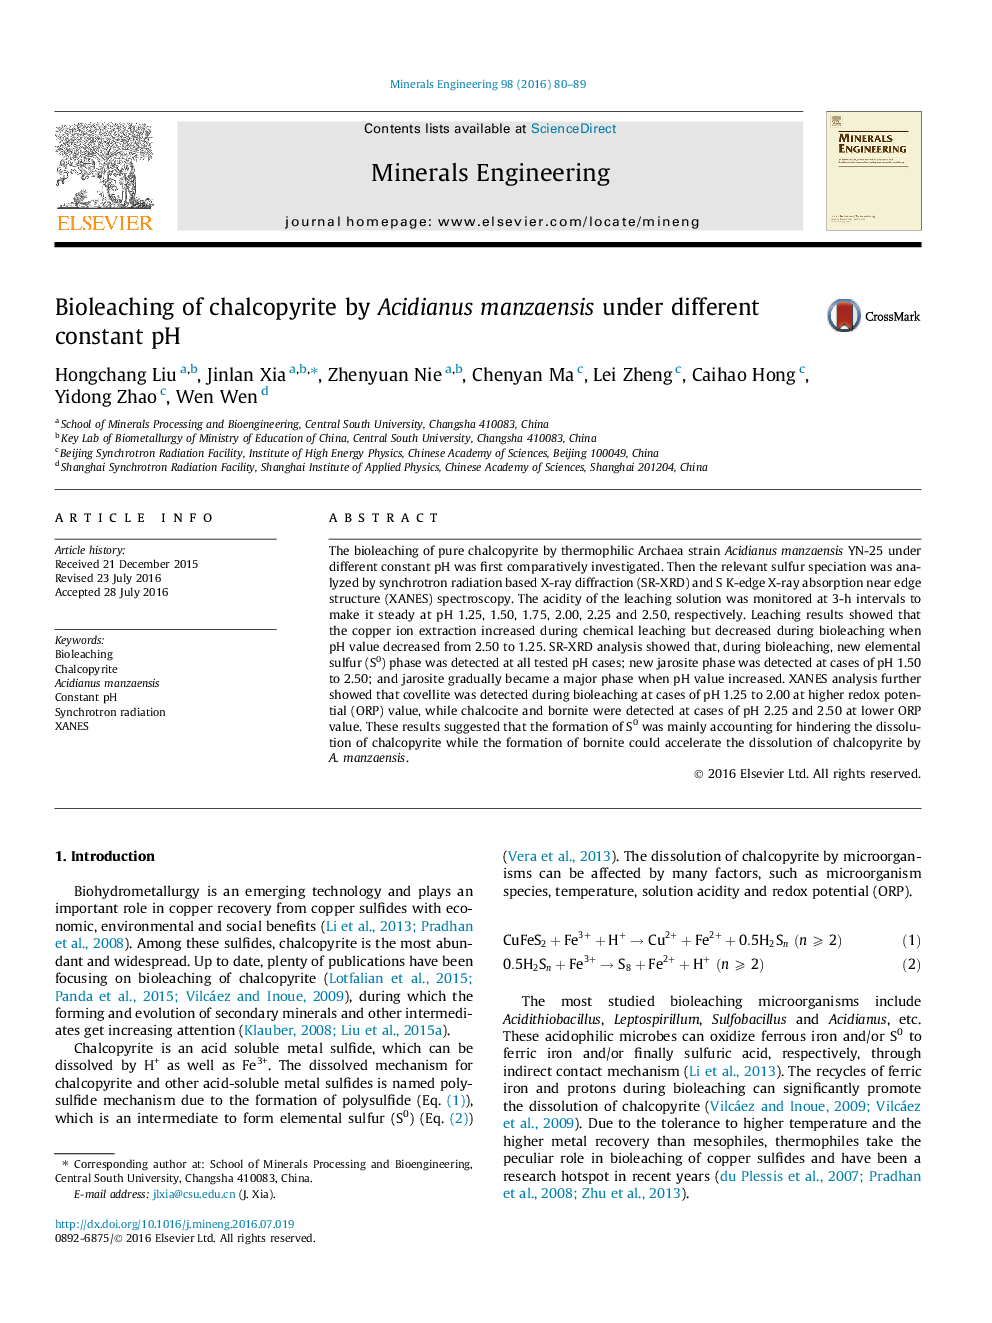 Bioleaching of chalcopyrite by Acidianus manzaensis under different constant pH